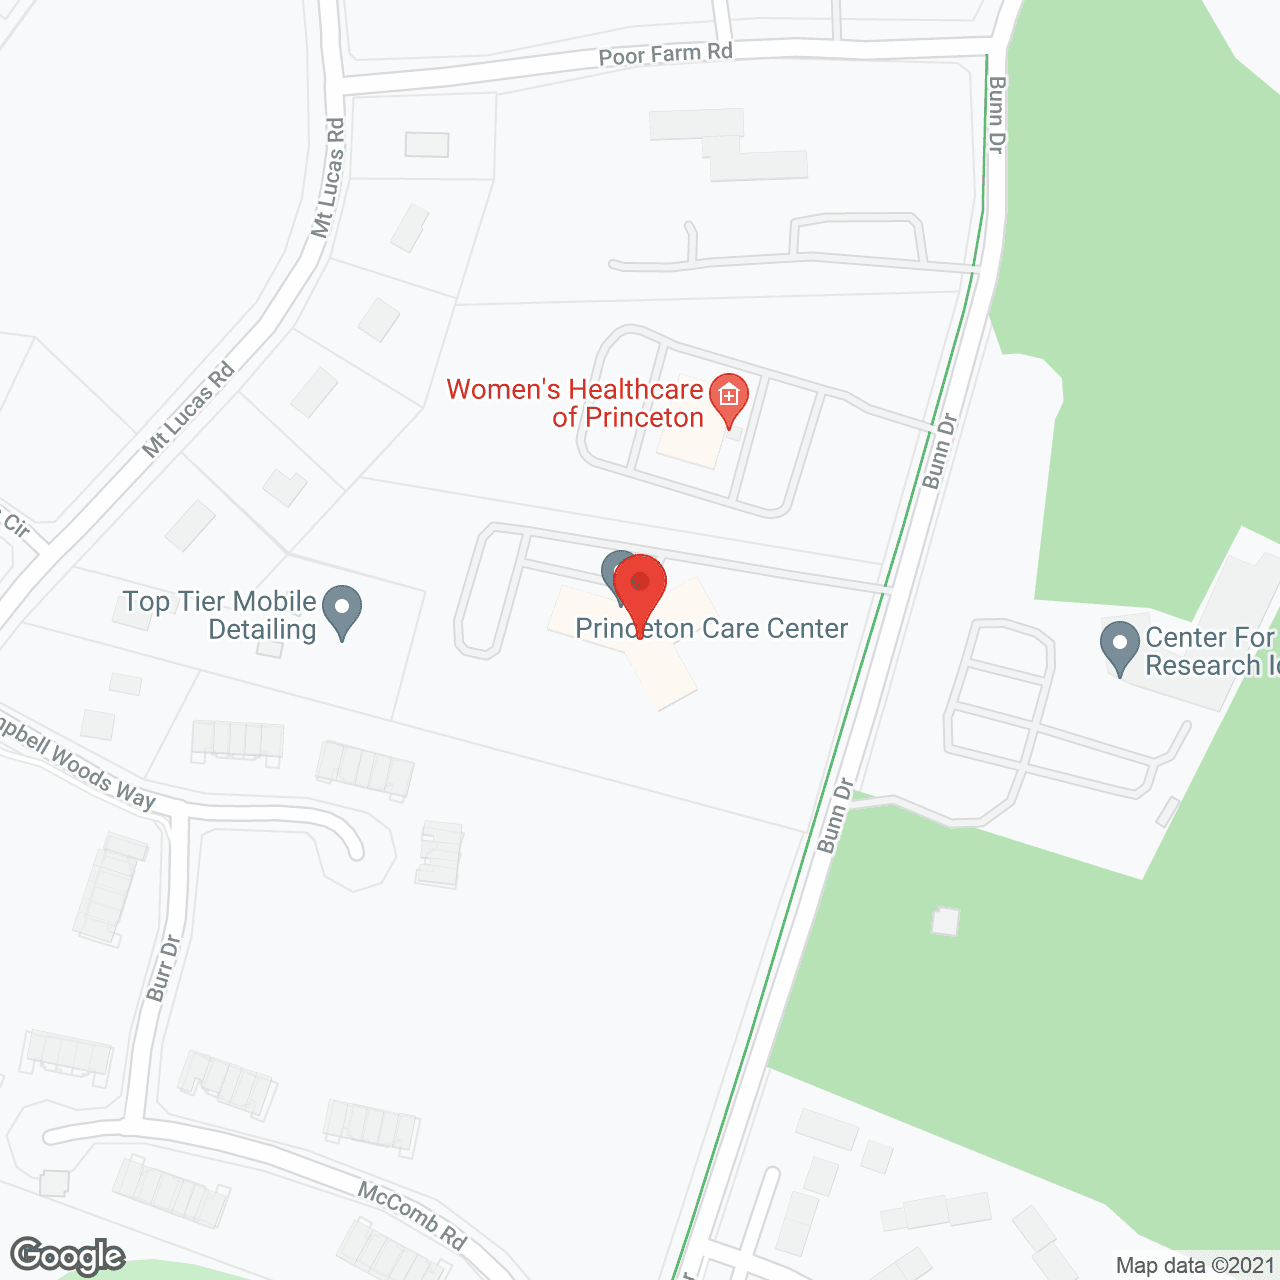 Princeton Care Center in google map